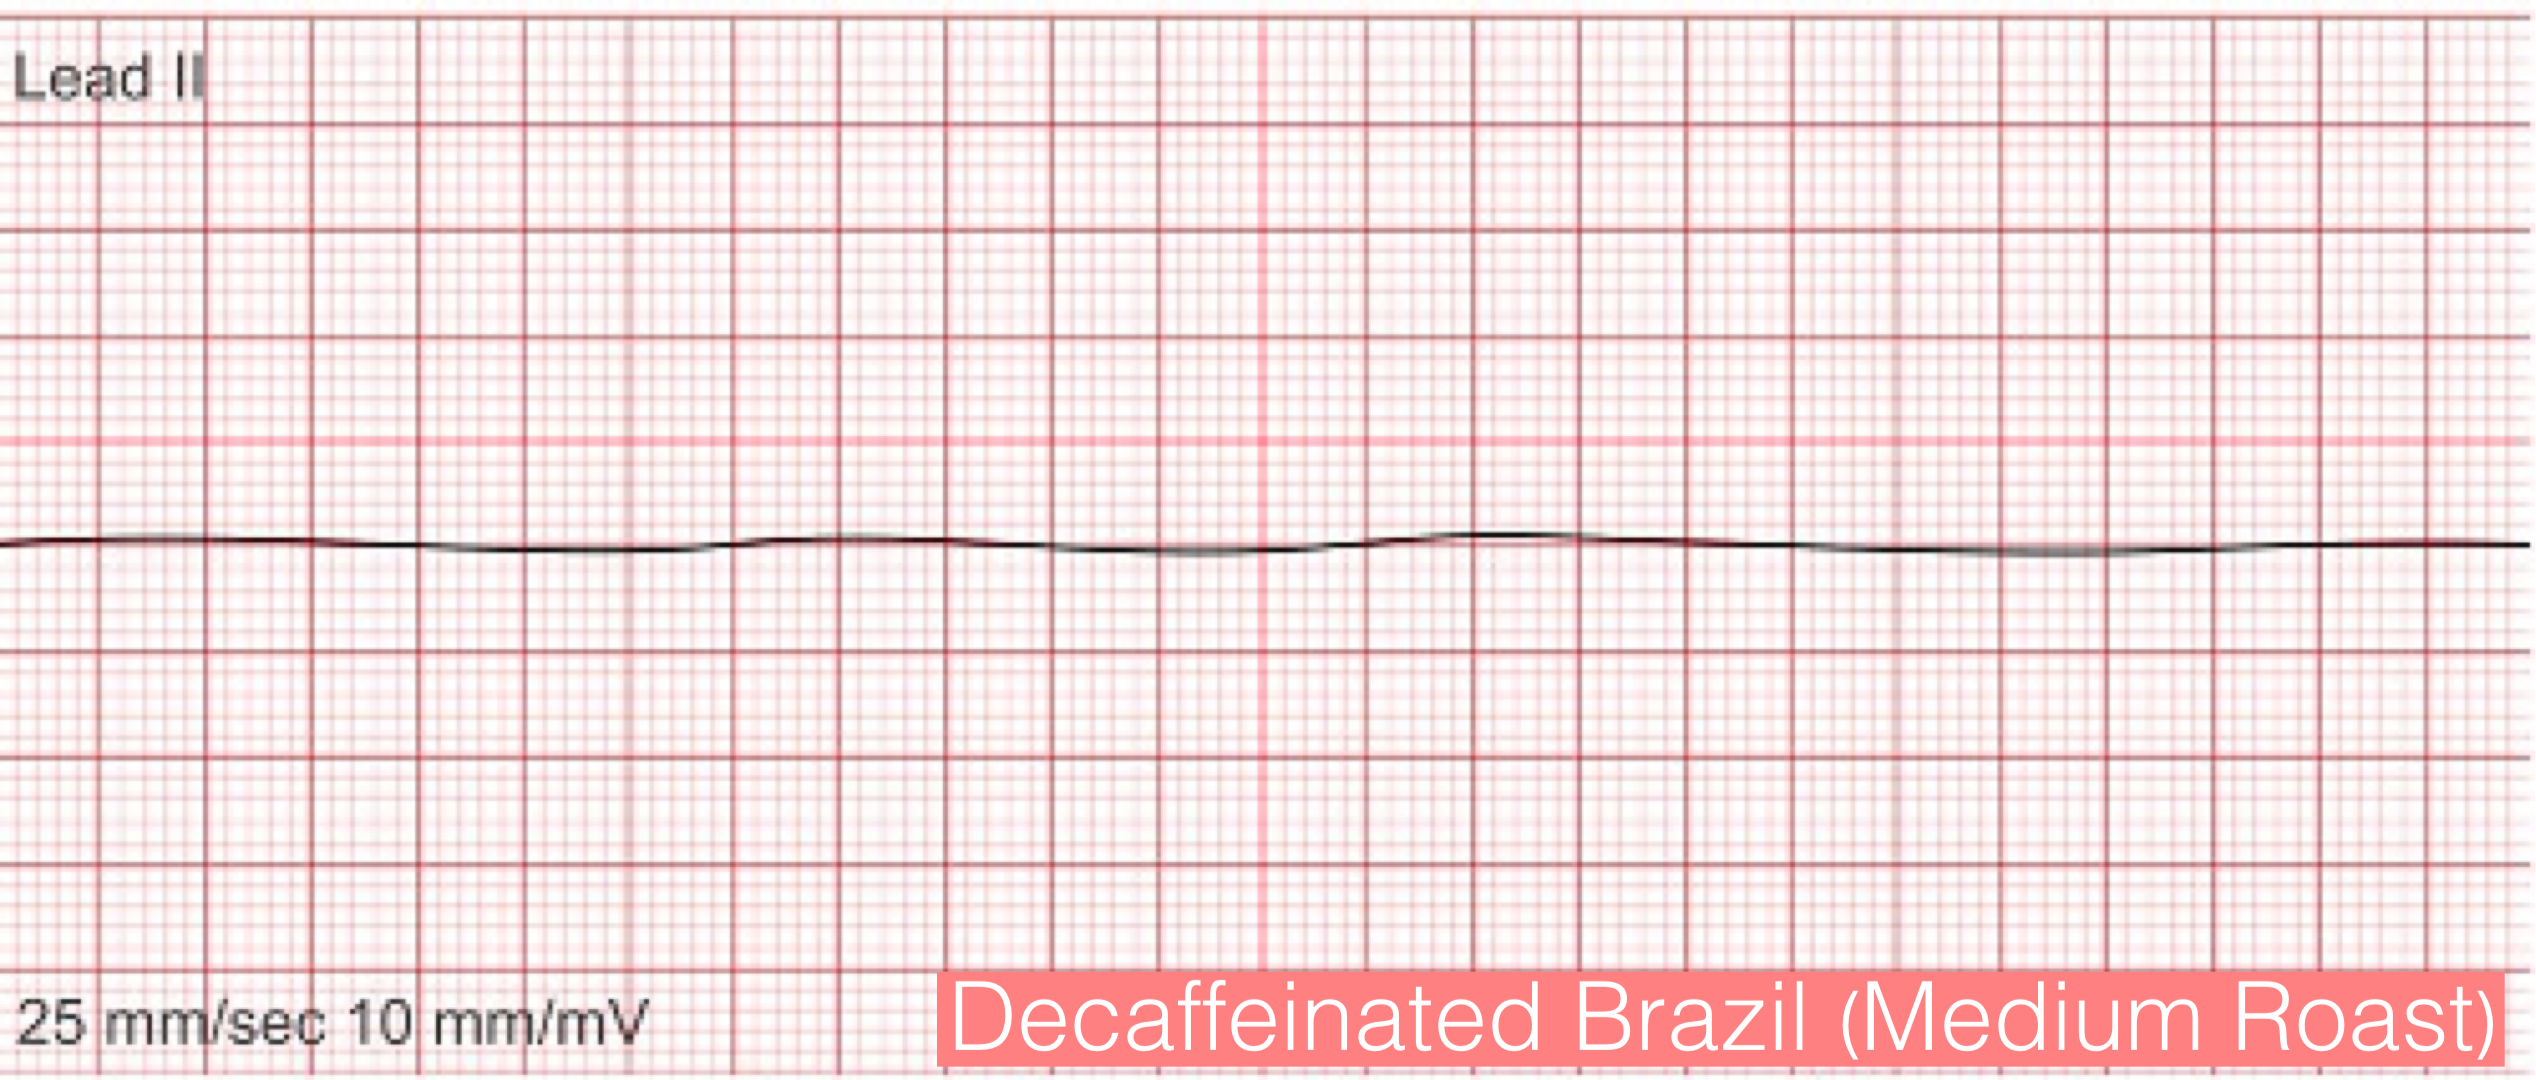 Brazil Decaffeinated (Medium Roast) Coffee